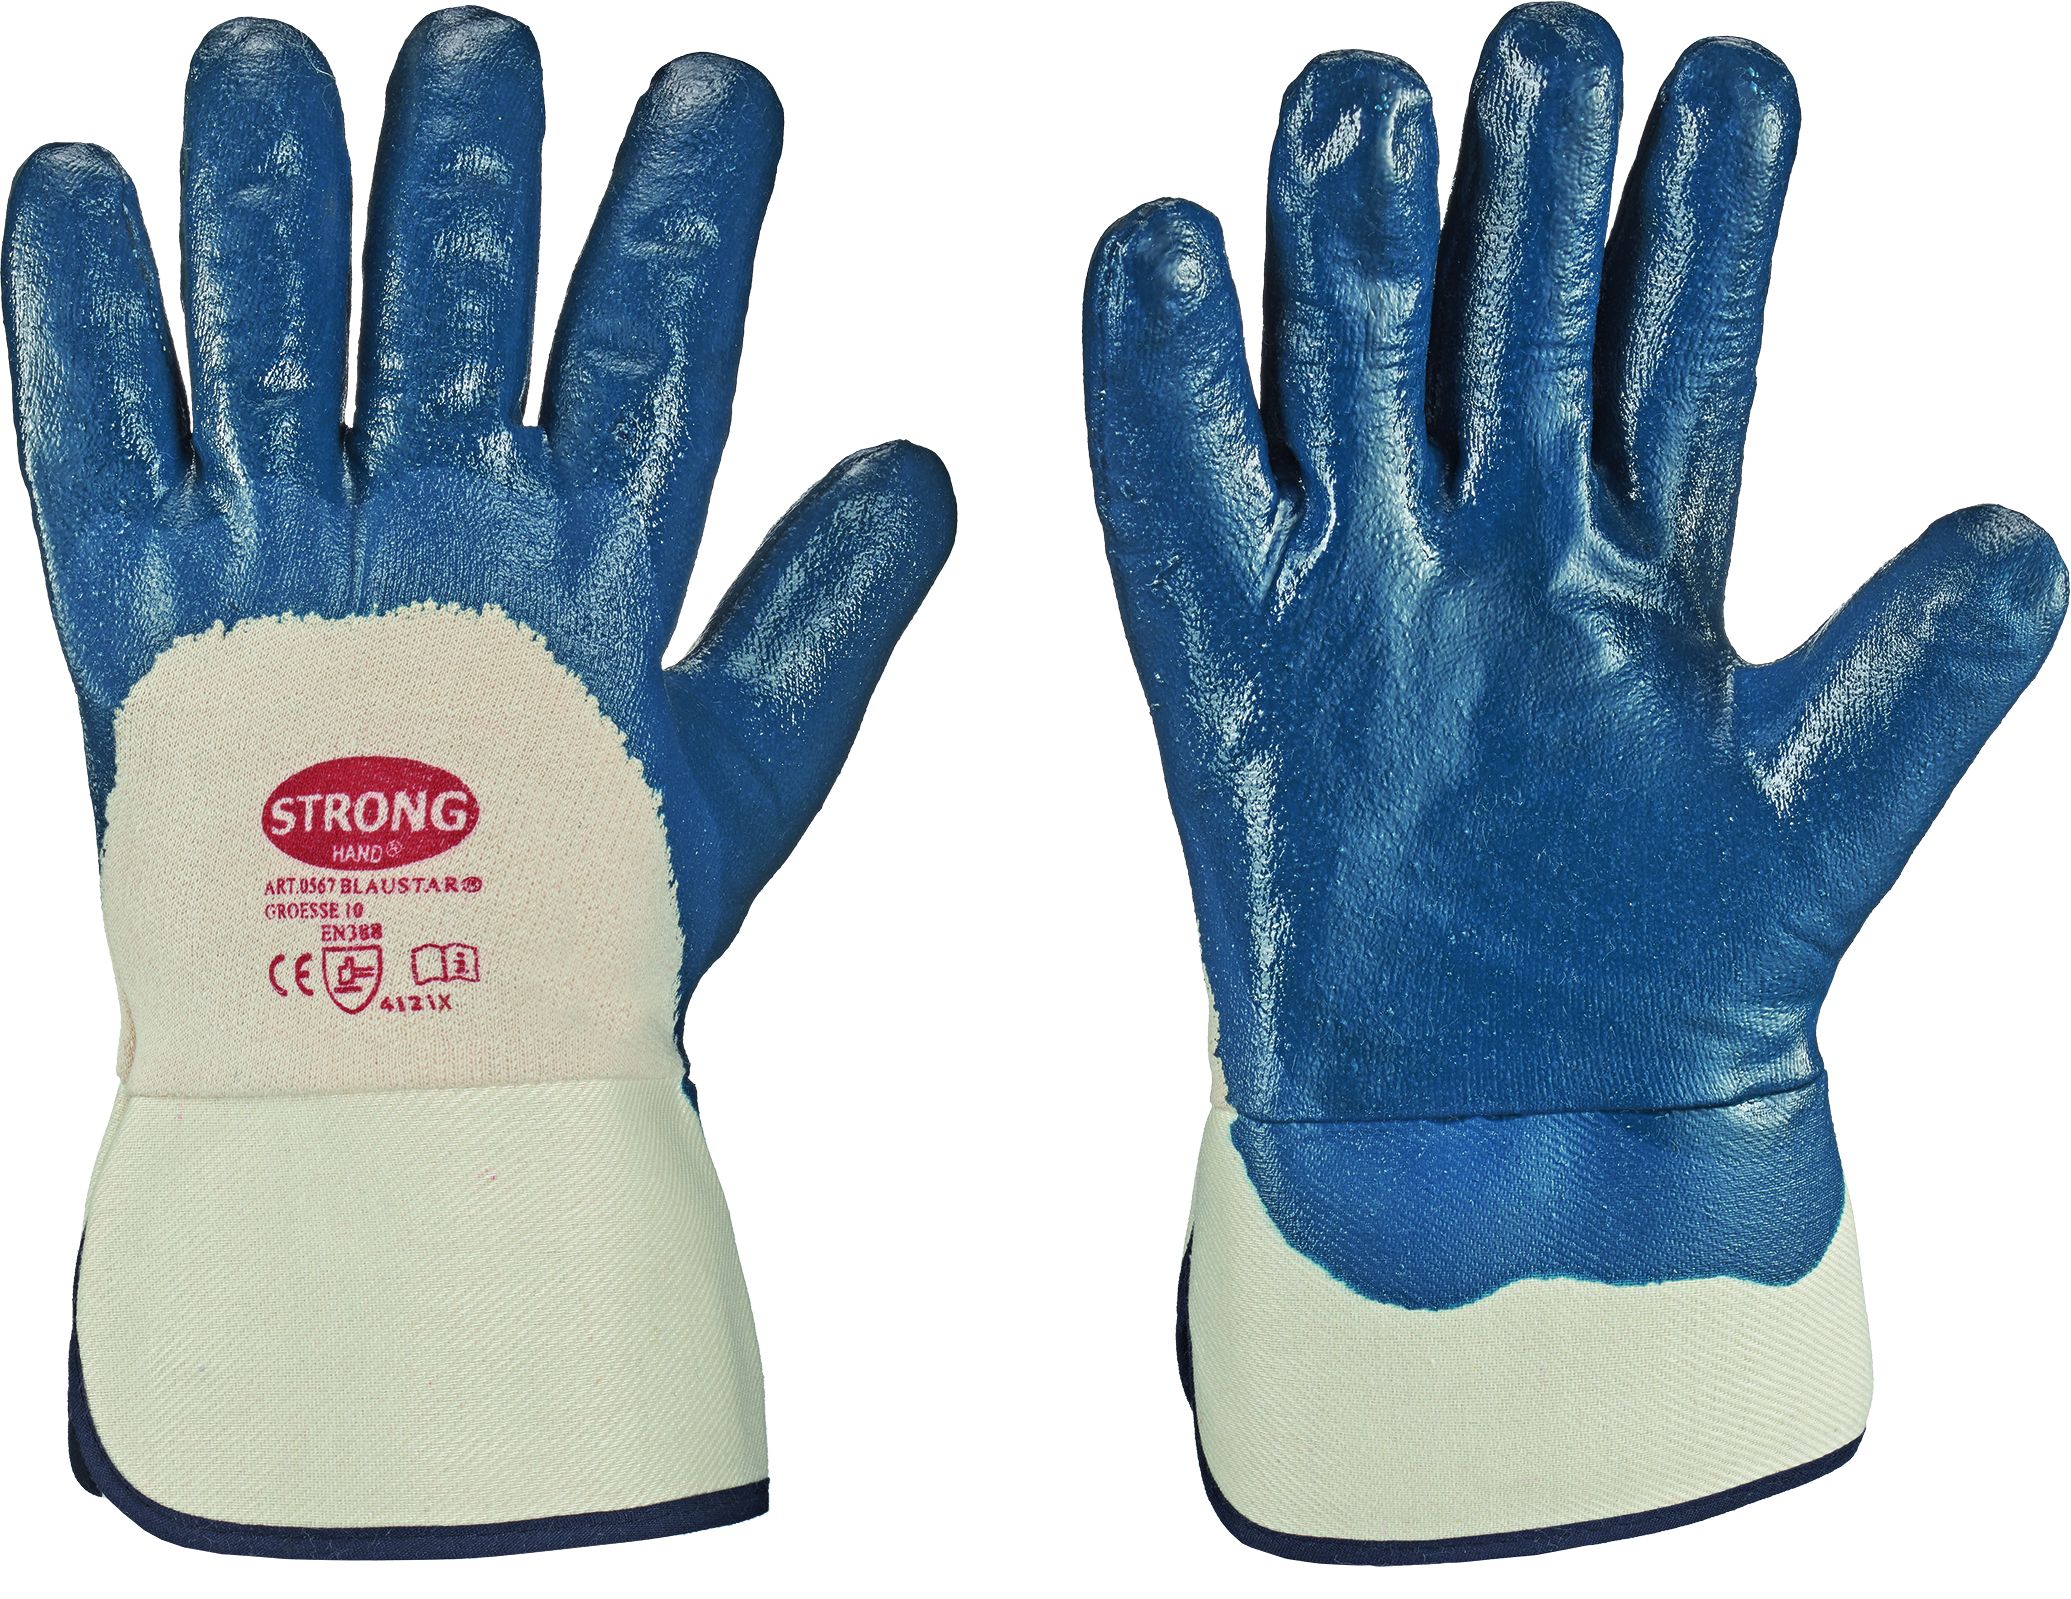 Feldtmann Handschuh Blaustar Nitril blau